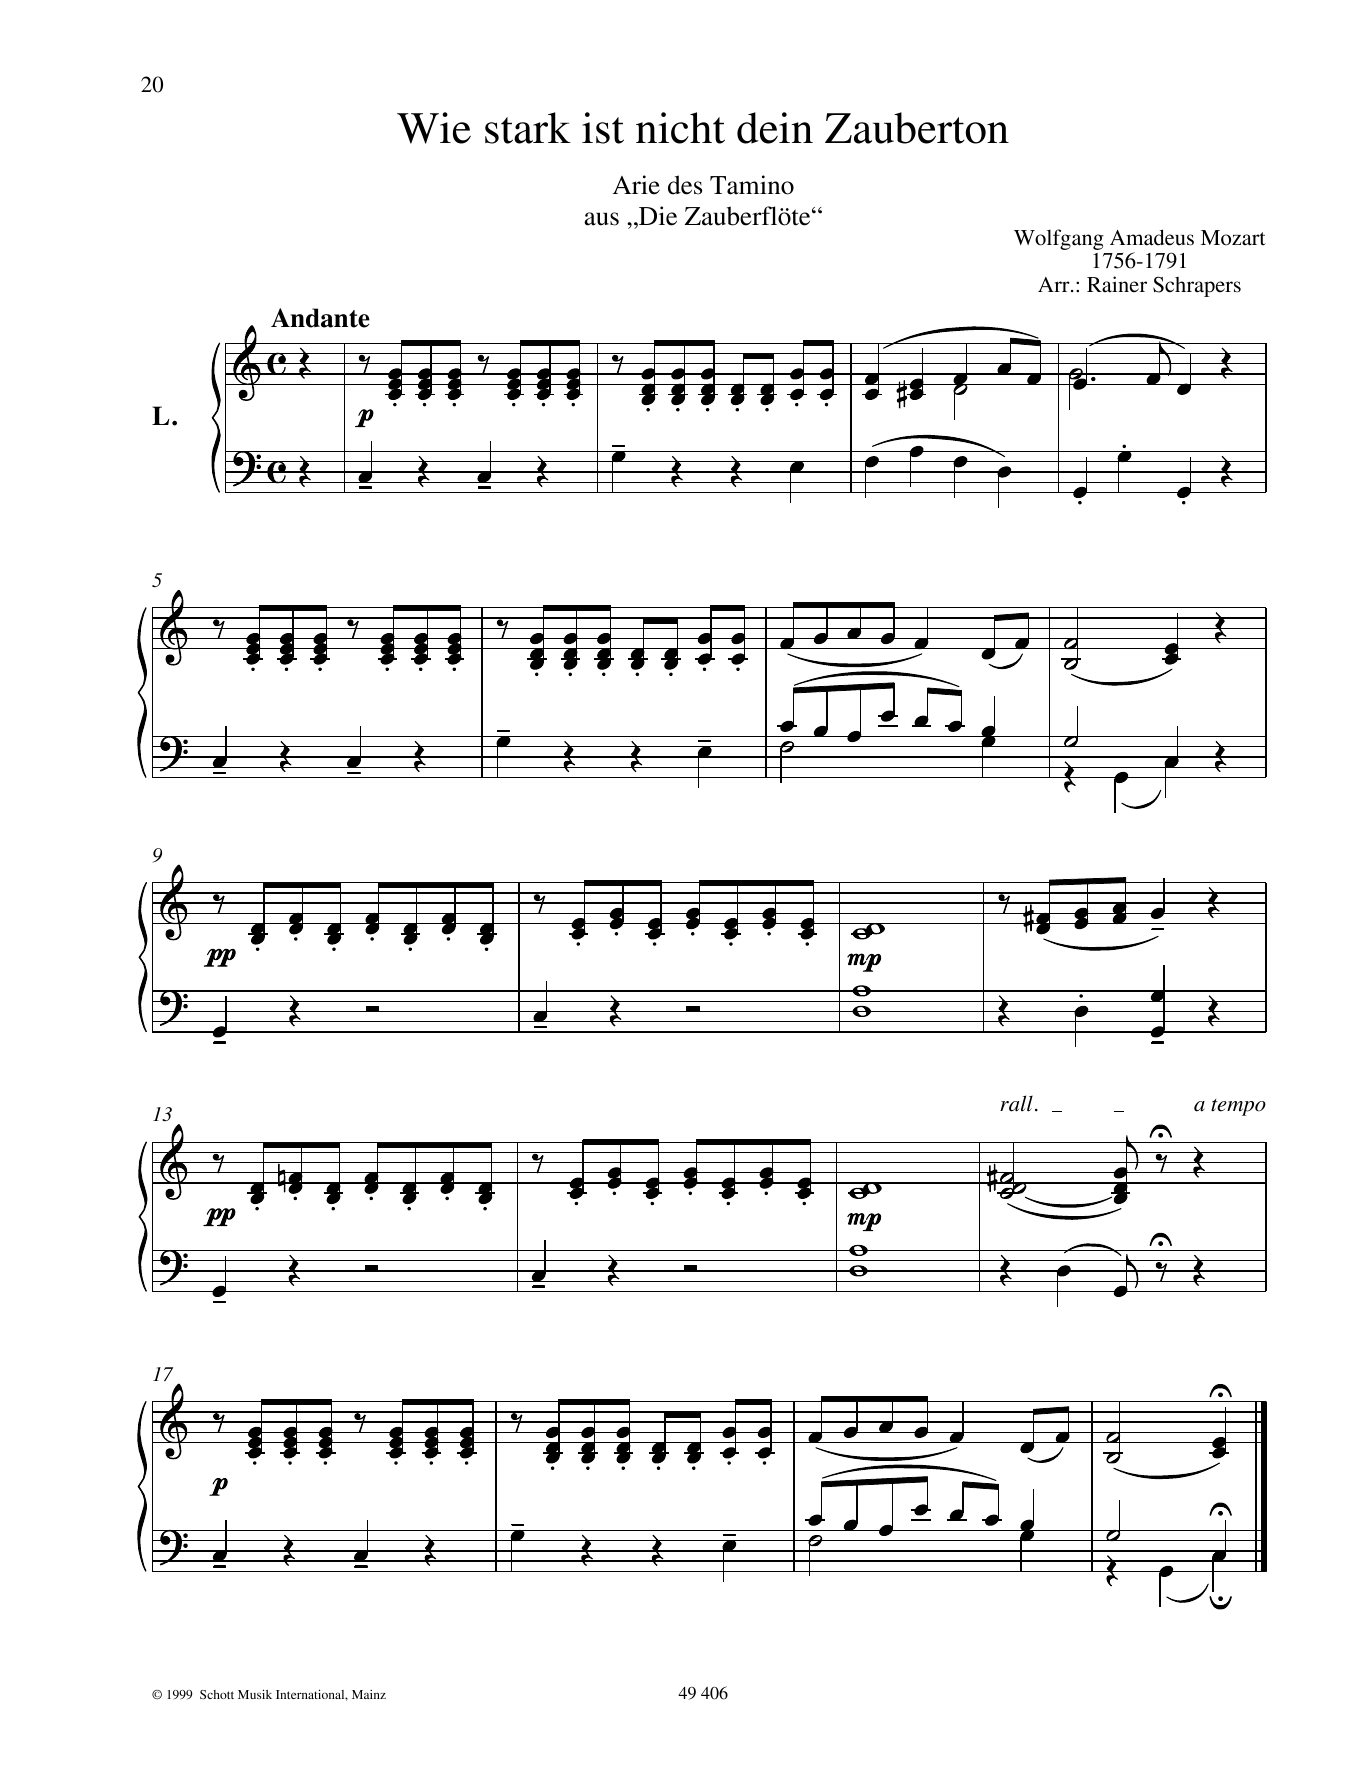 Download Wolfgang Amadeus Mozart Wie stark ist nicht dein Zauberton Sheet Music and learn how to play Piano Duet PDF digital score in minutes